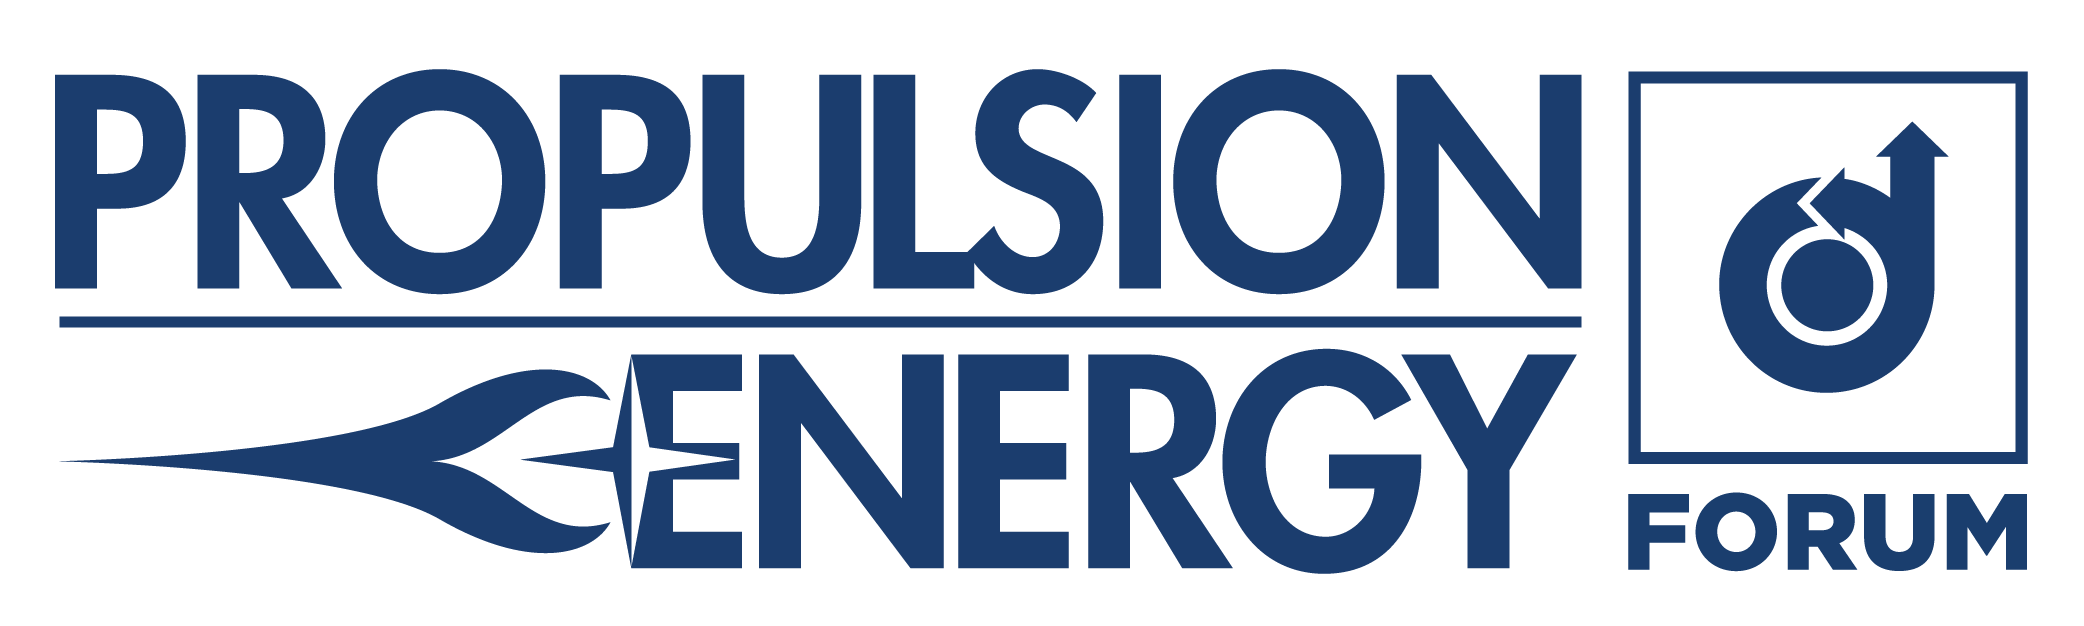 Propulsion & Energy Forum logo